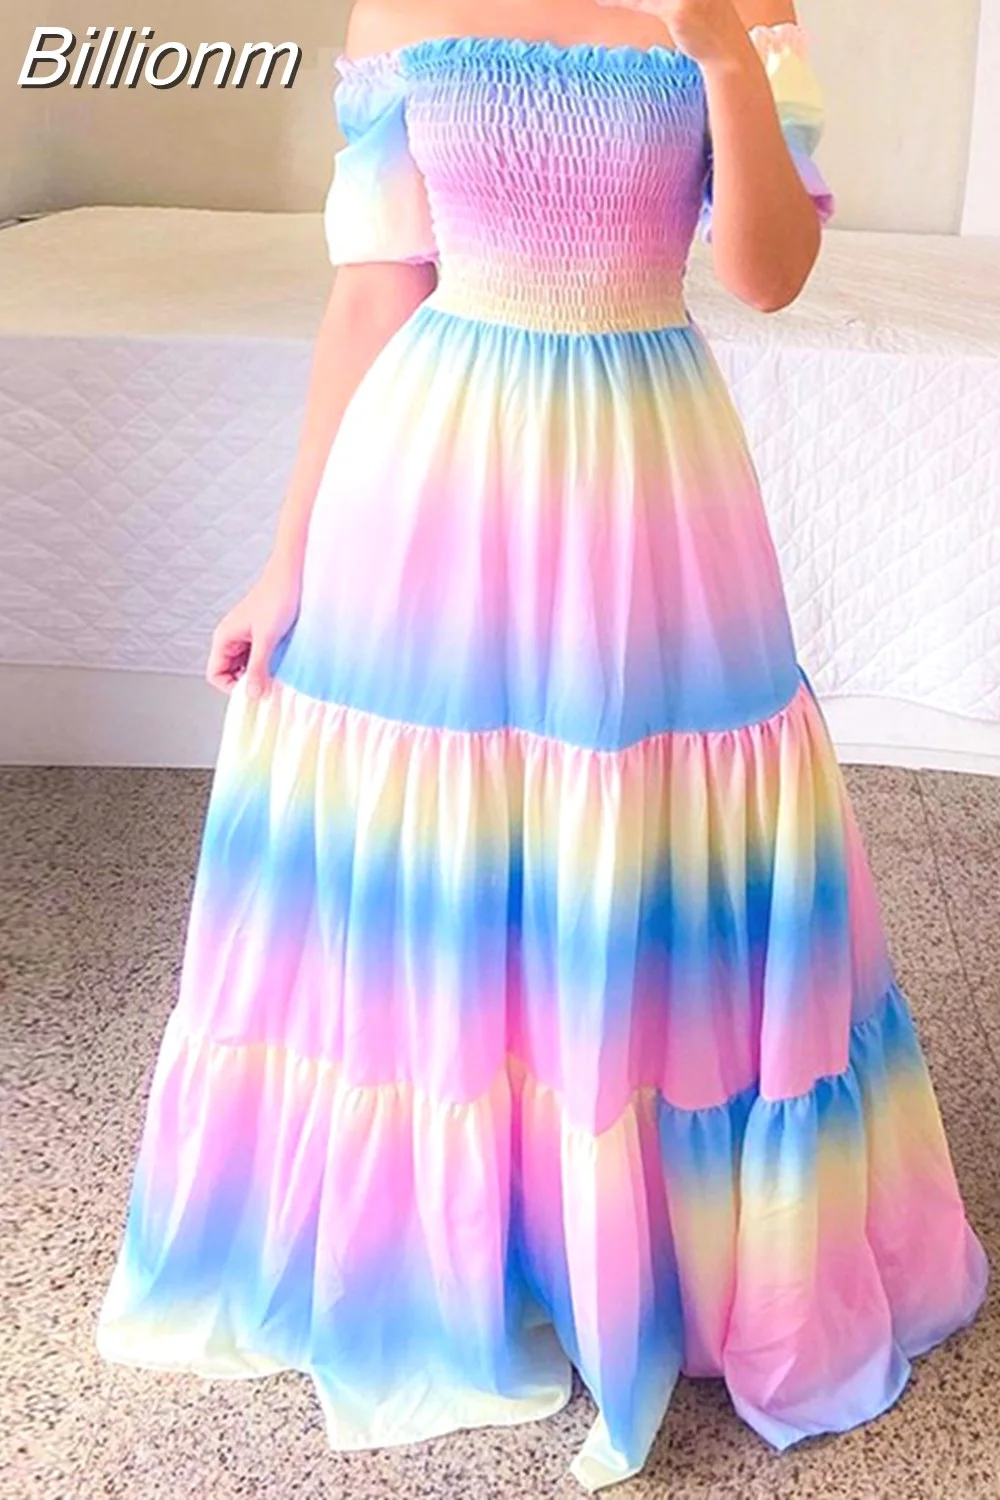 Billionm Off The Shoulder Tube Top Dress Butterfly Rainbow Floral Print Dress Ladies Elegant Slim Summer Bohemian Party Maxi Dresses